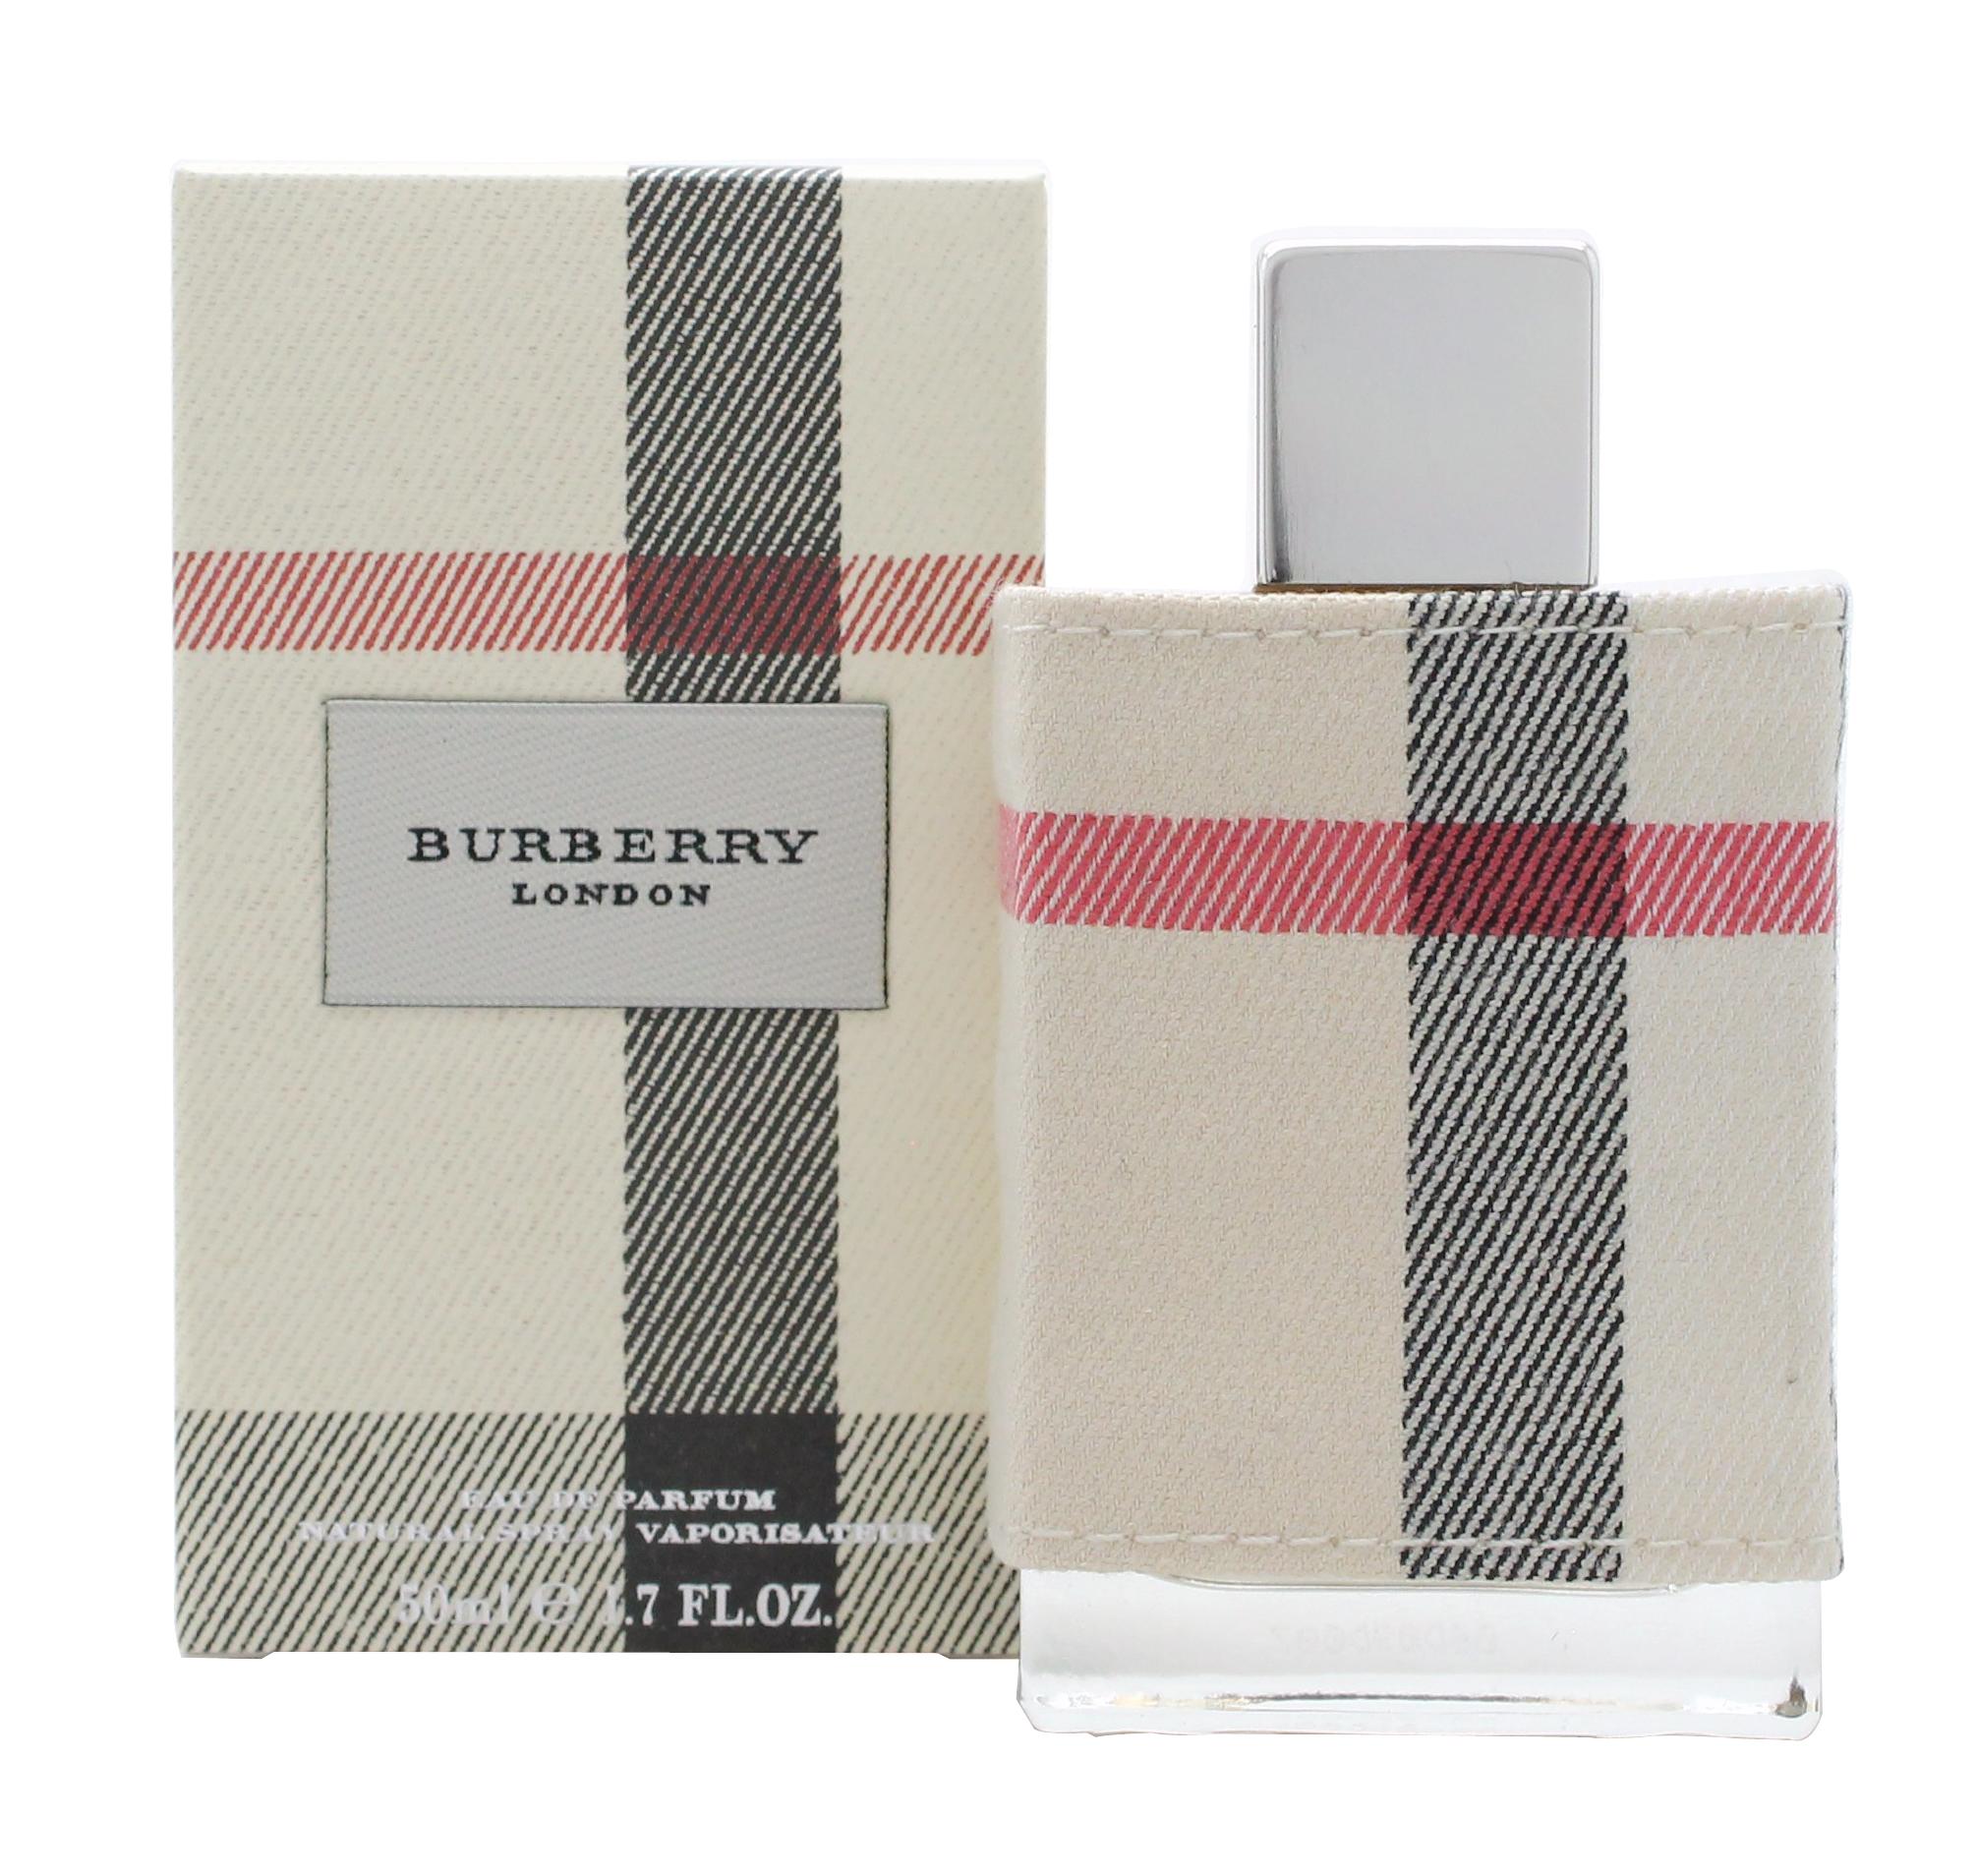 Burberry London Eau de Parfum 50ml Spray